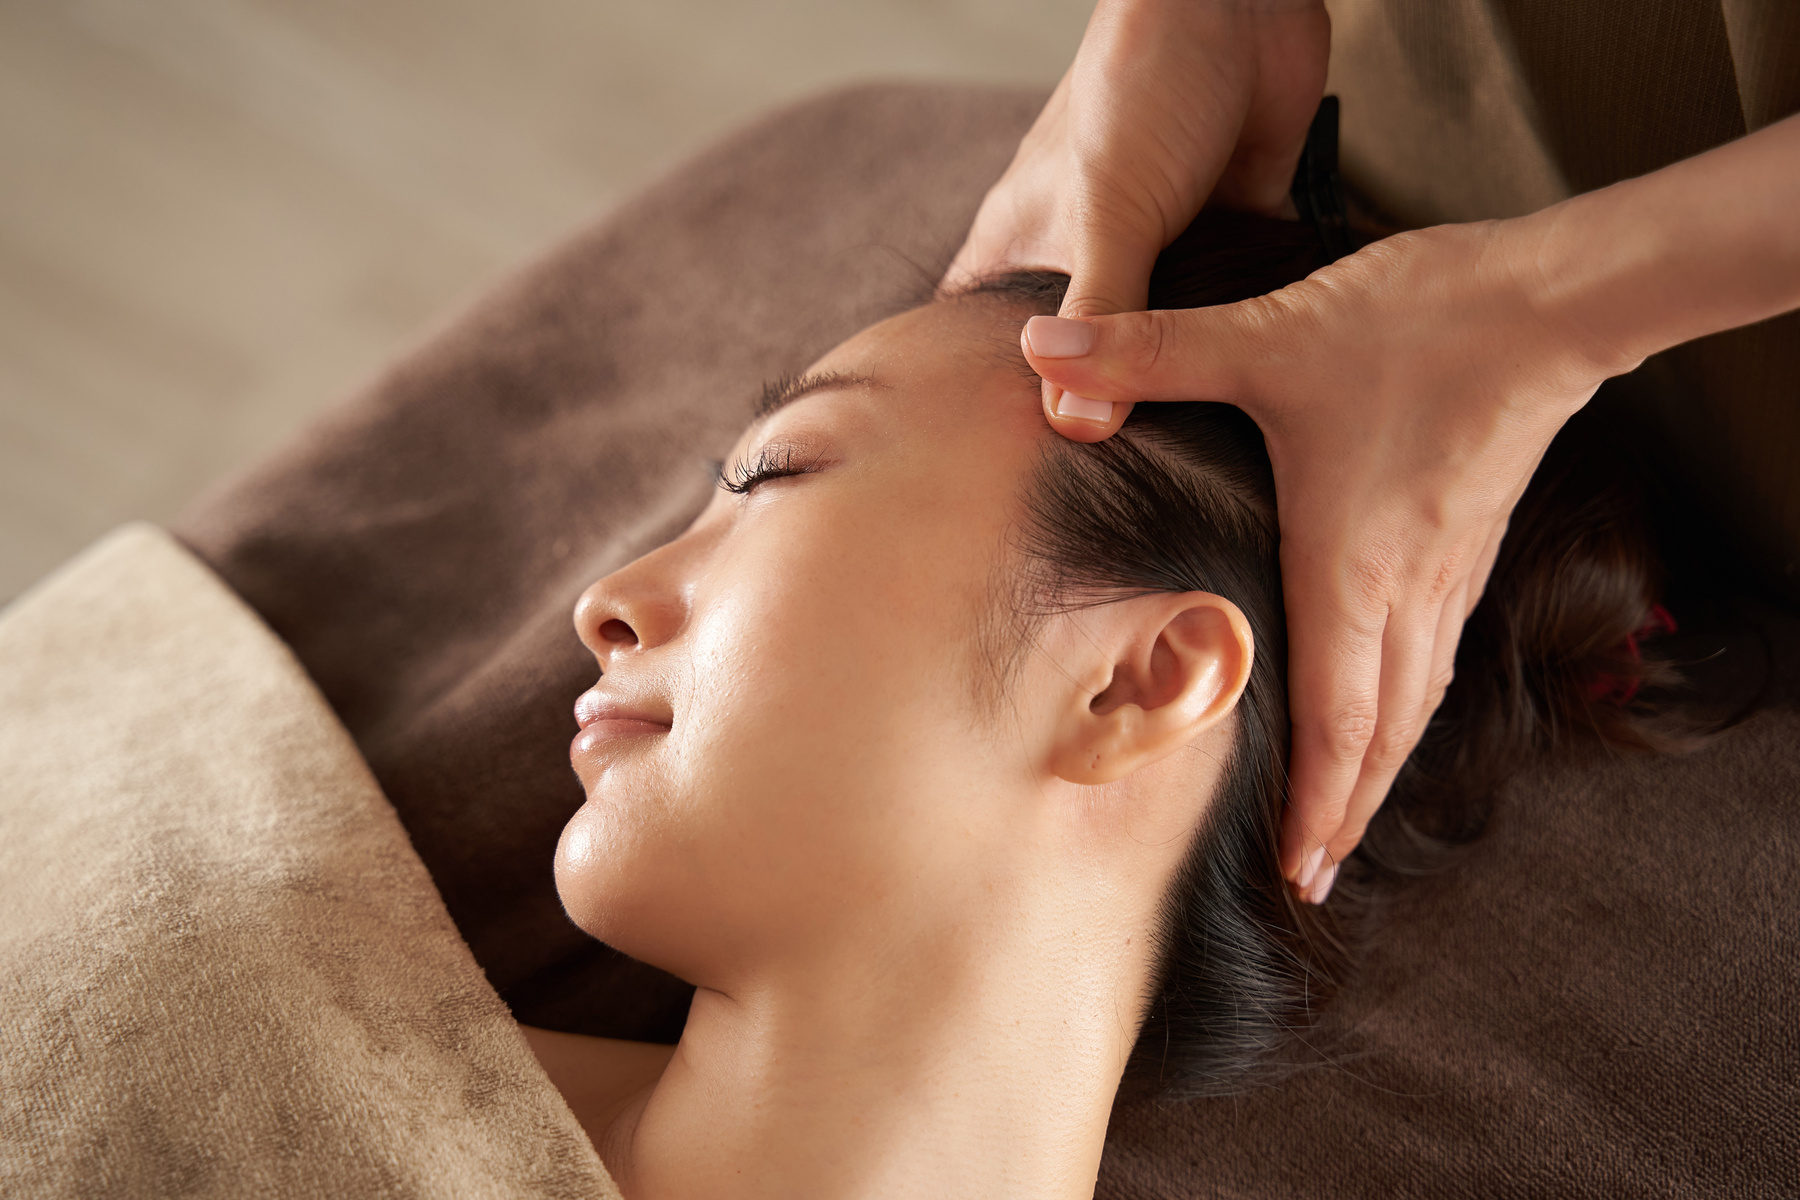 Japanese woman receiving a facial massage at an aesthetic salon